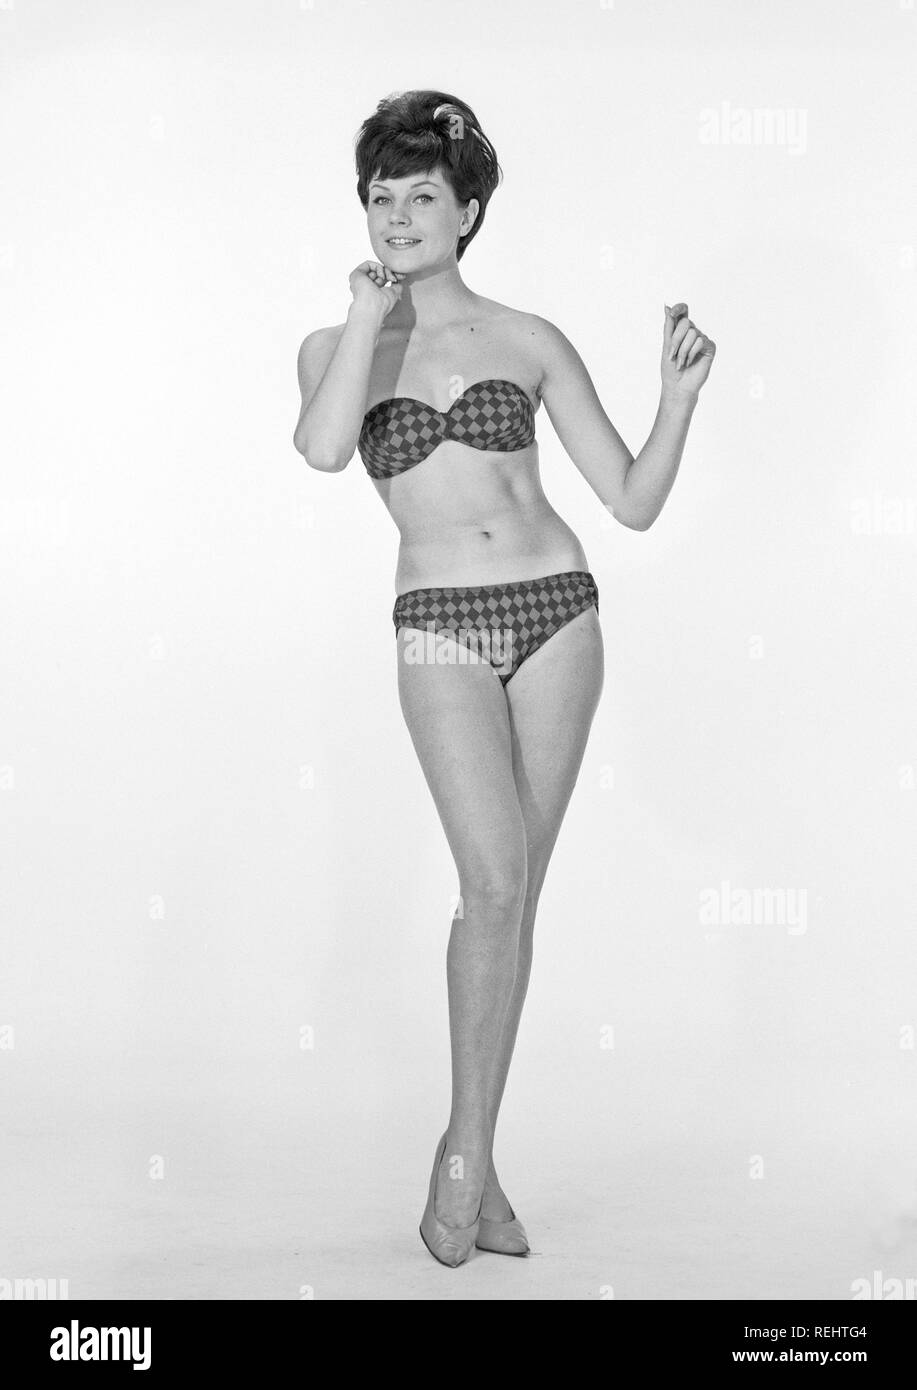 betray Communist tail 1960s bikini fashion. A blonde girl in a photographers studio in a typical 1960s  bikini. Sweden 1960s Photo Kristoffersson ref CP25-5 Stock Photo - Alamy